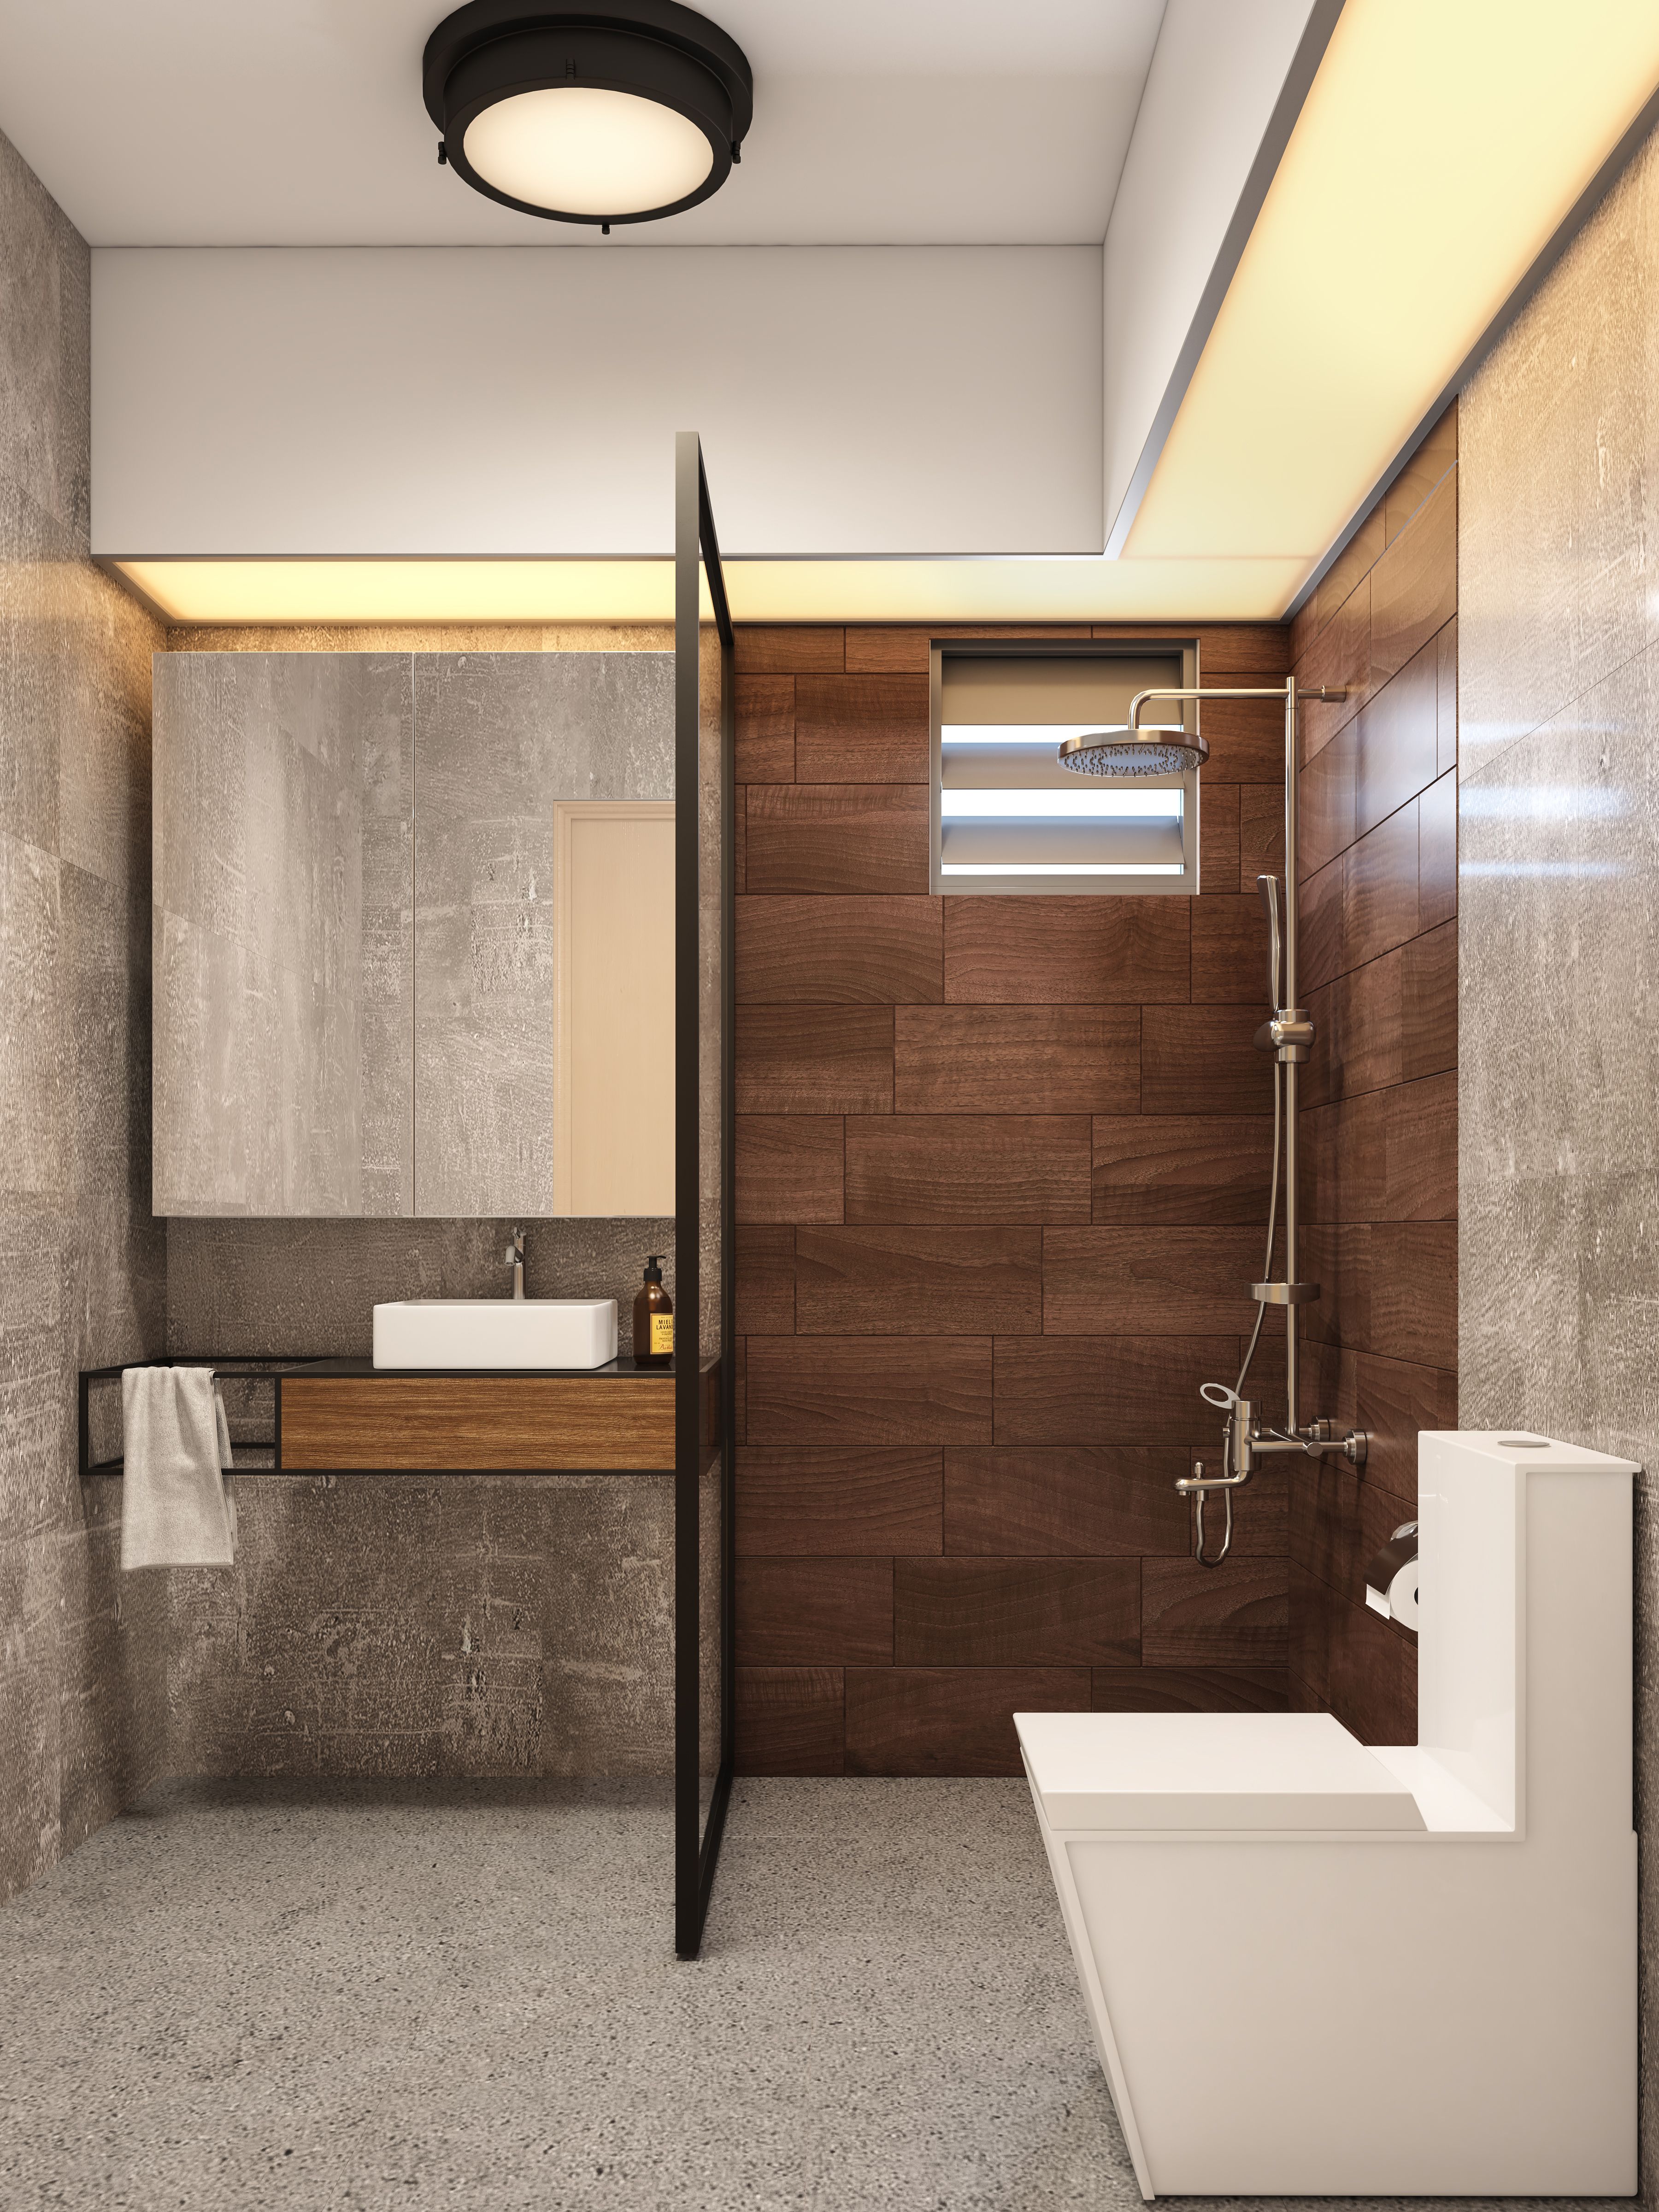 Bohemian Bathroom Design With Stone Textured Wall